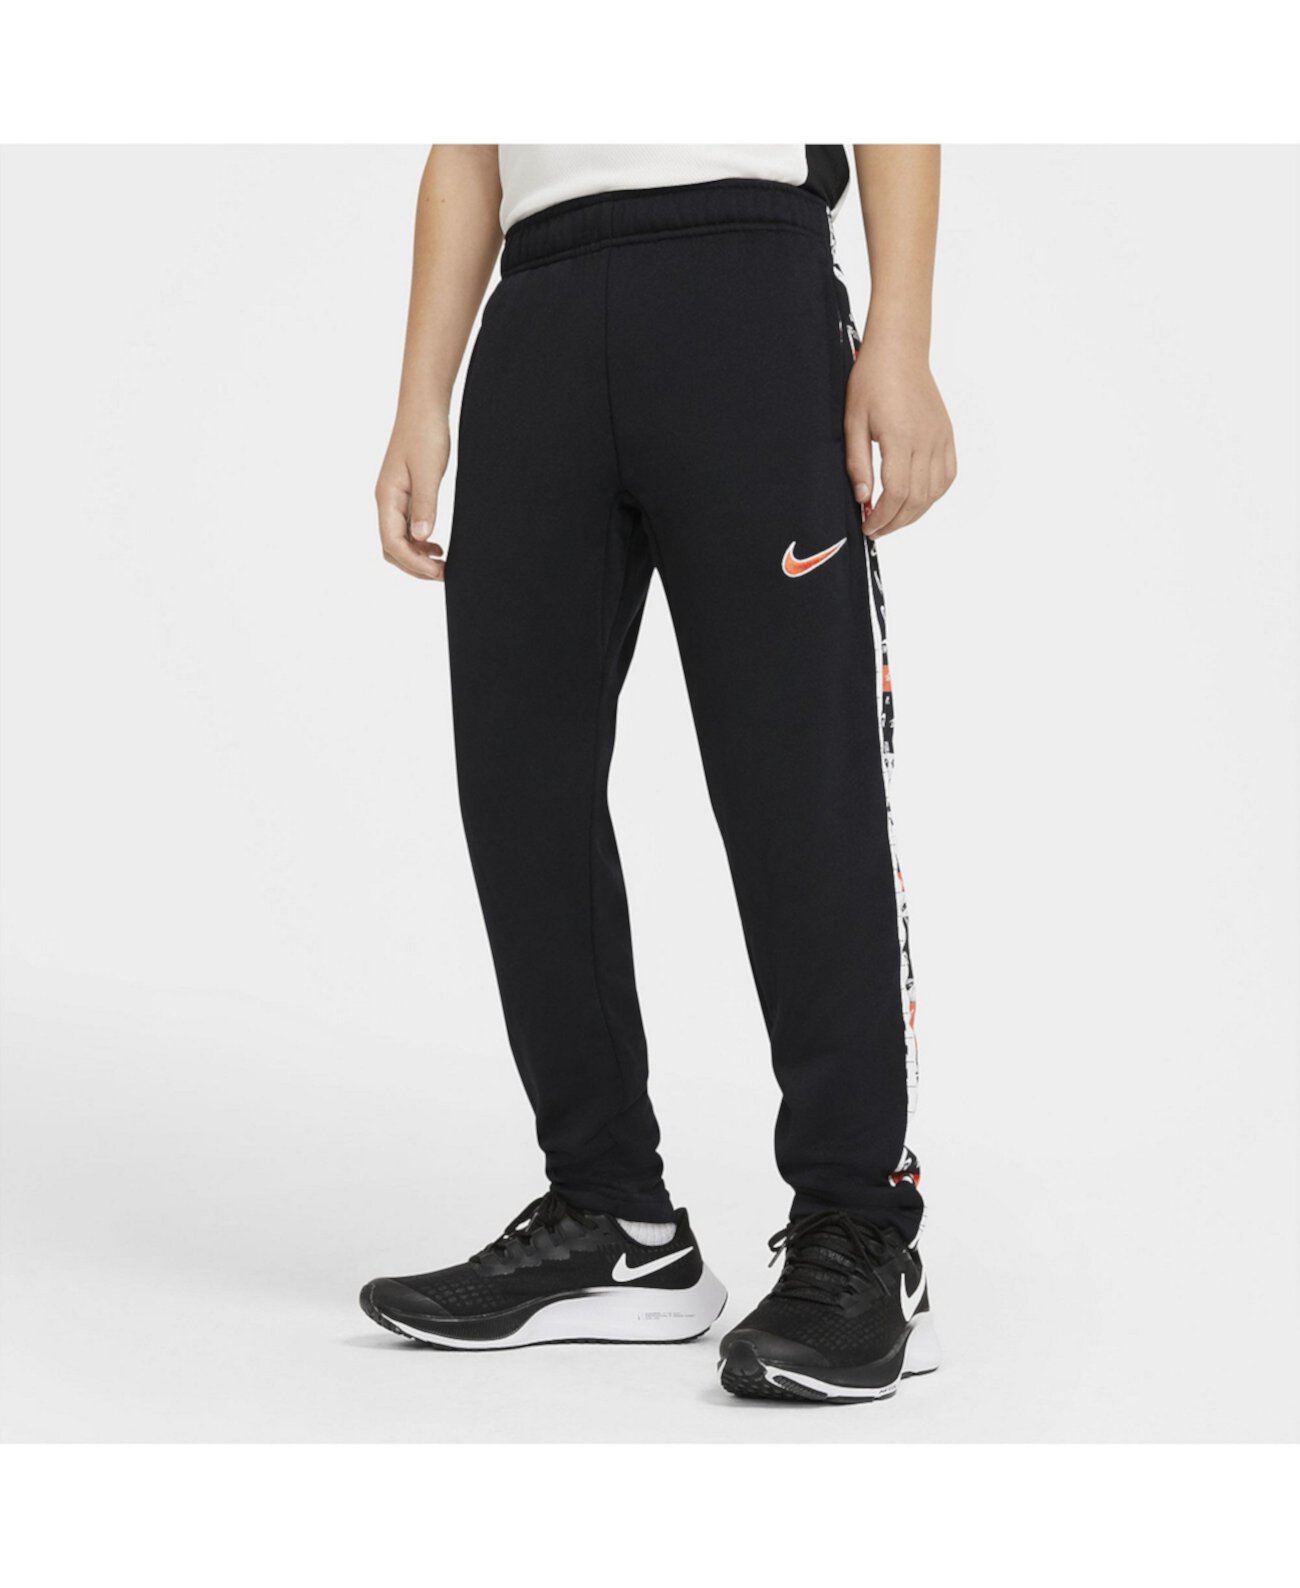 Зауженные брюки для тренинга Big Boys Dri-fit с рисунком Nike